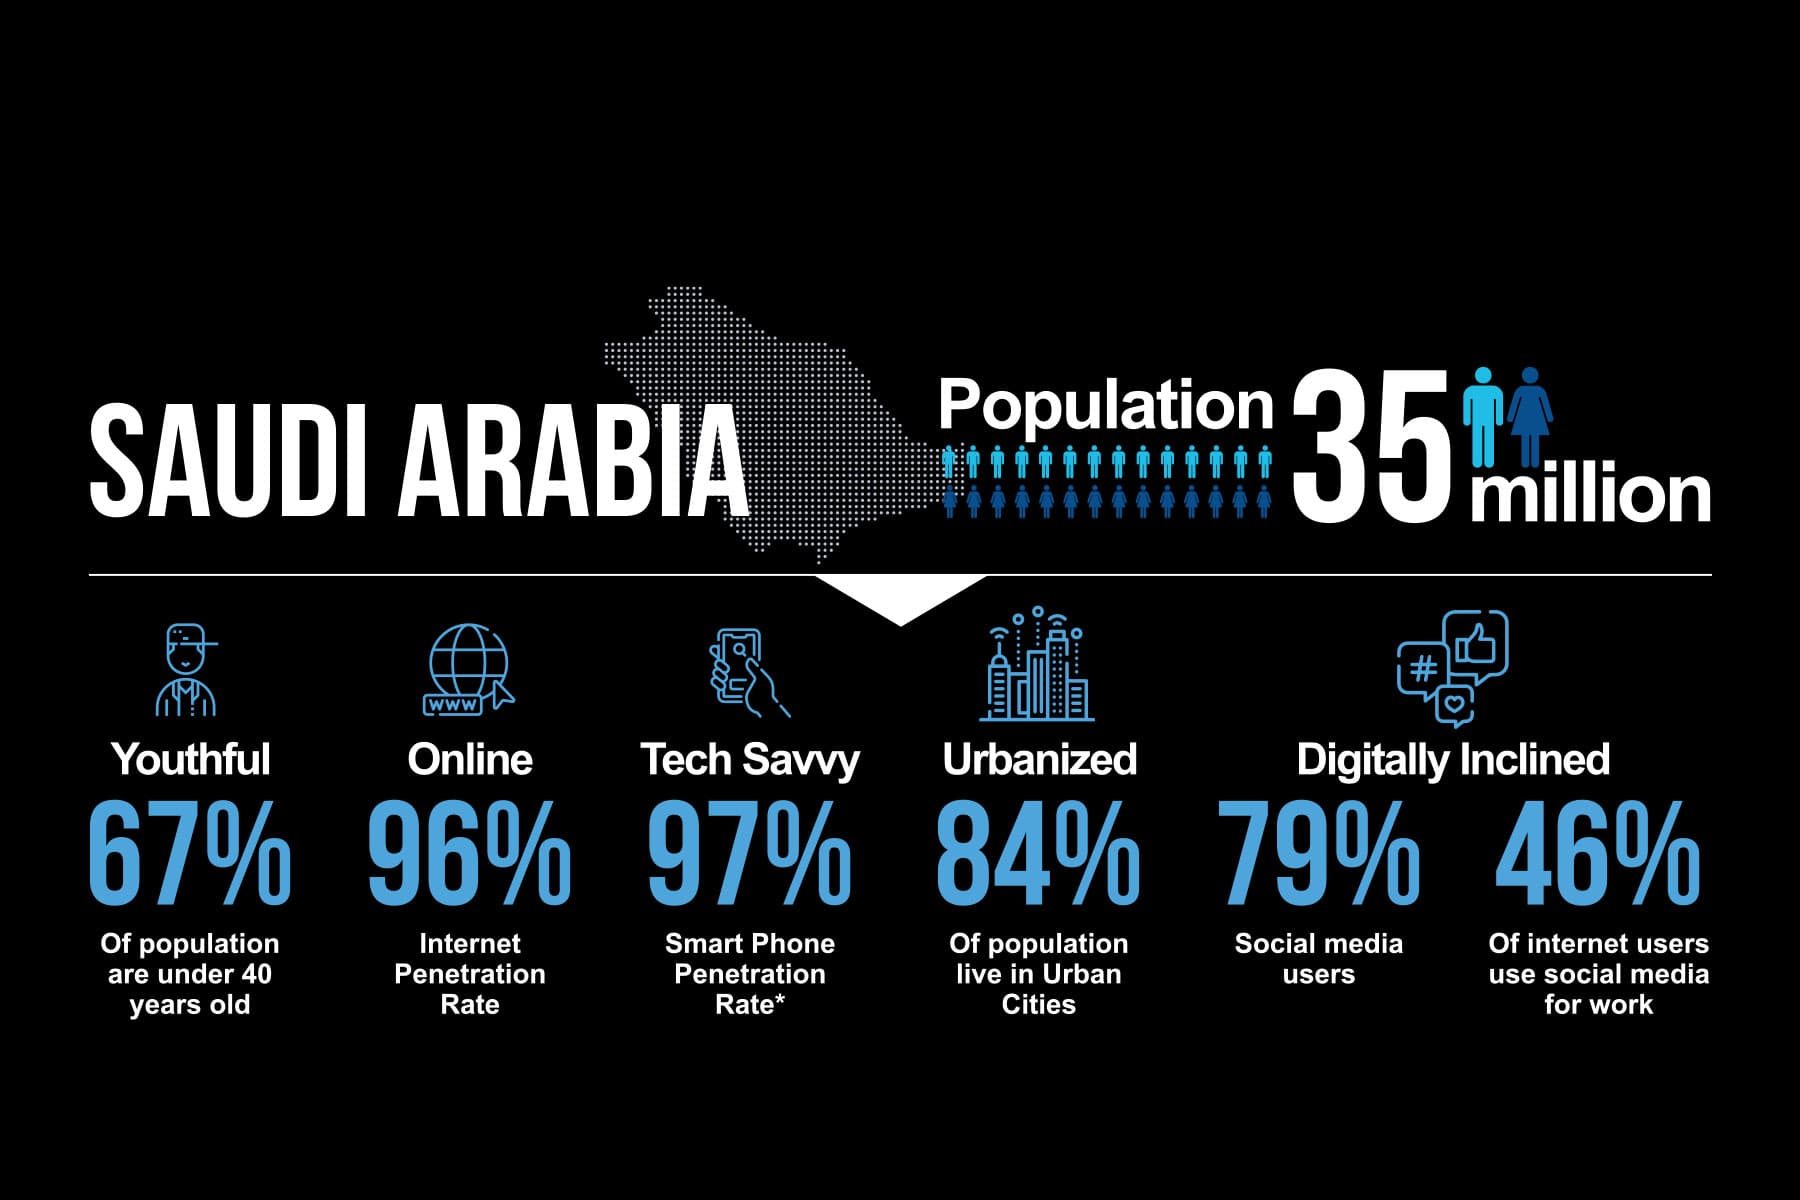 Saudi Arabia's Digitally Inclined Population